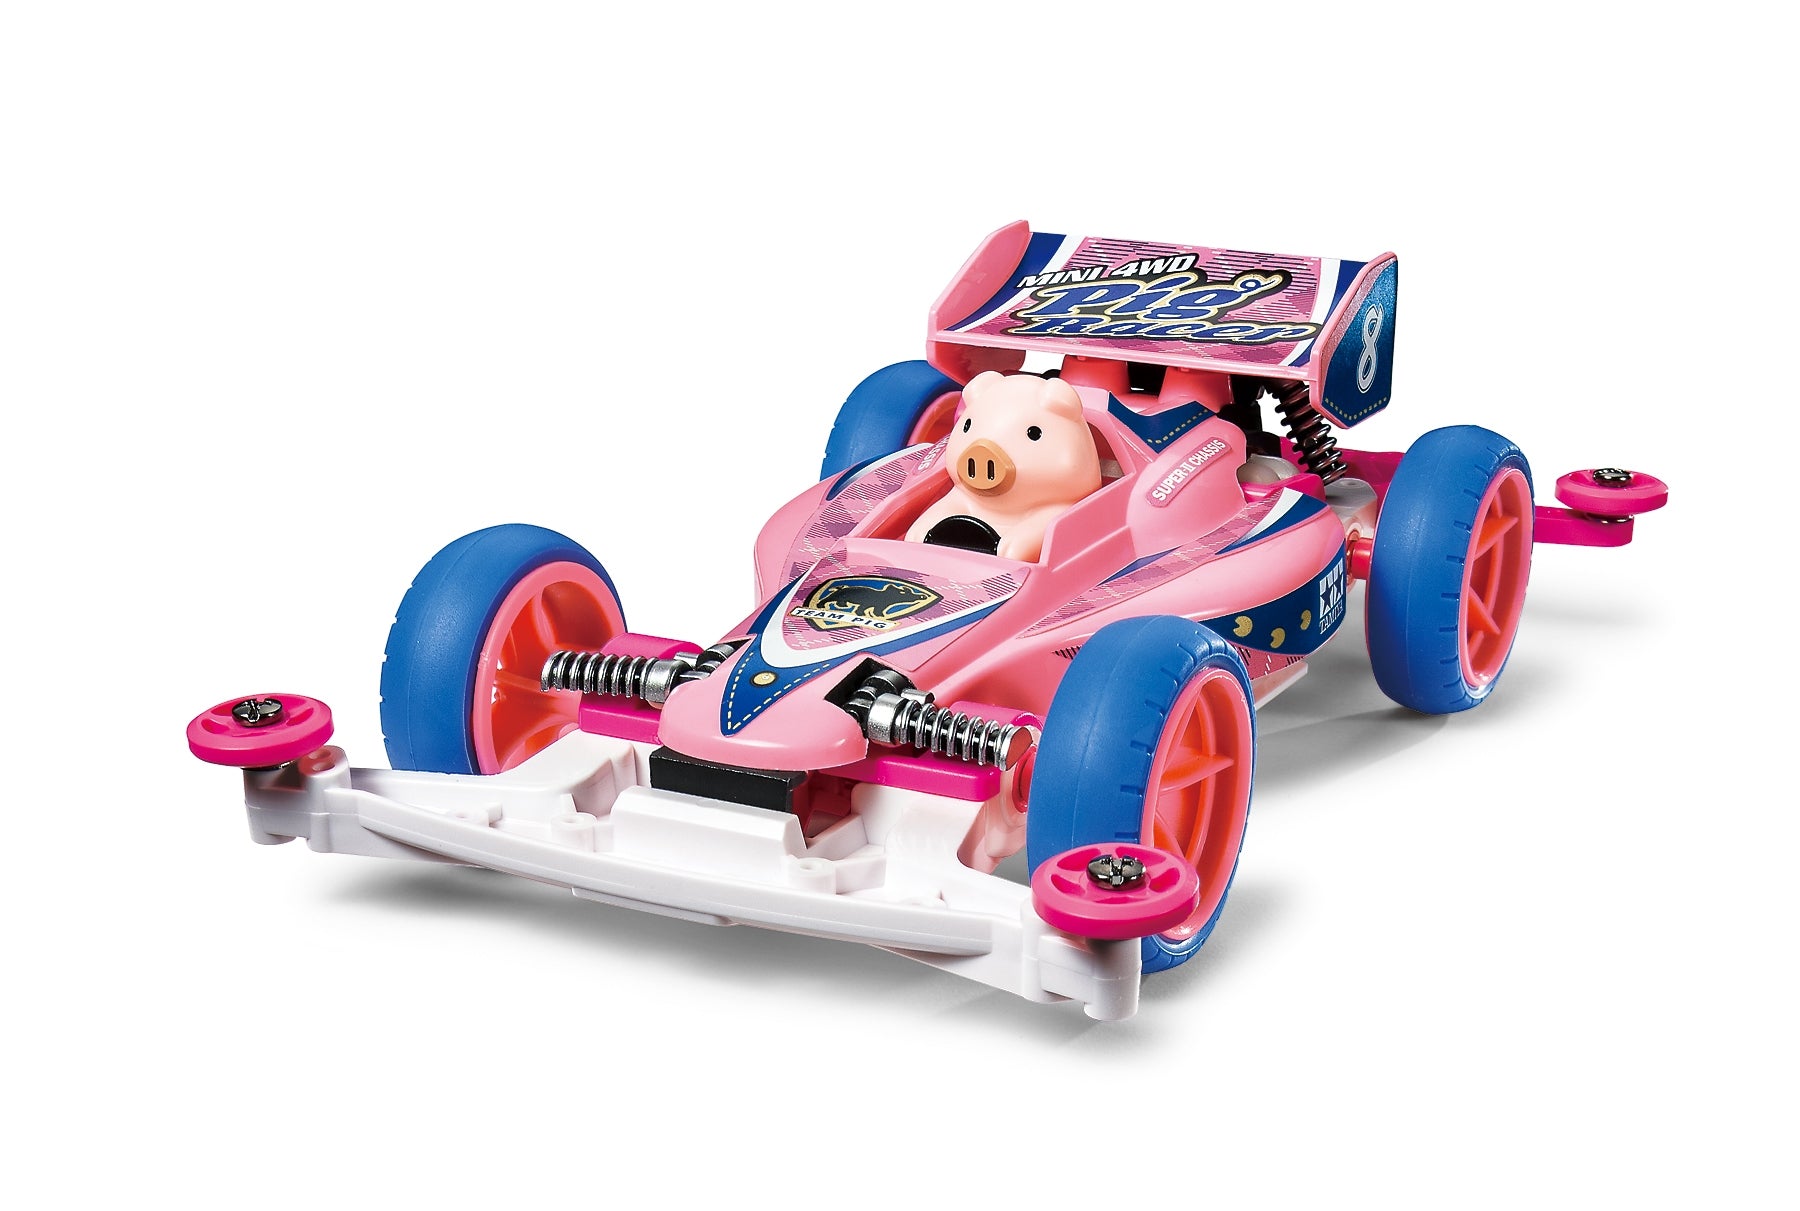 TAMIYA 18089 1/32 JR Mini 4WD Pig Racer Kit